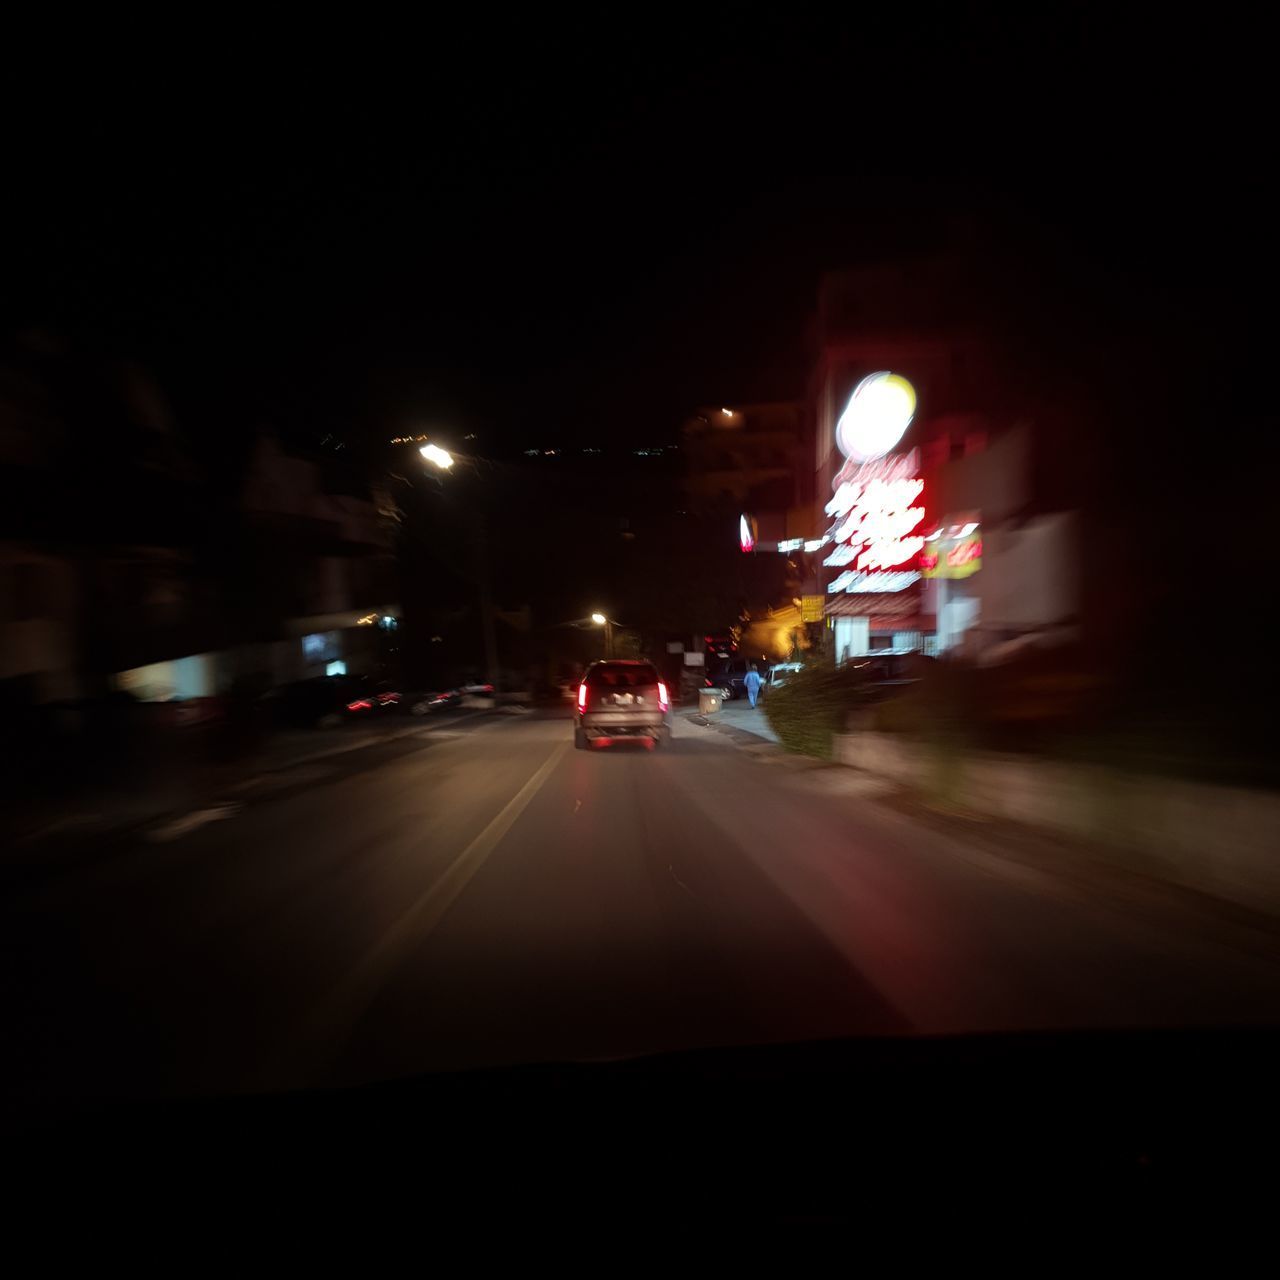 TRAFFIC ON ROAD AT NIGHT